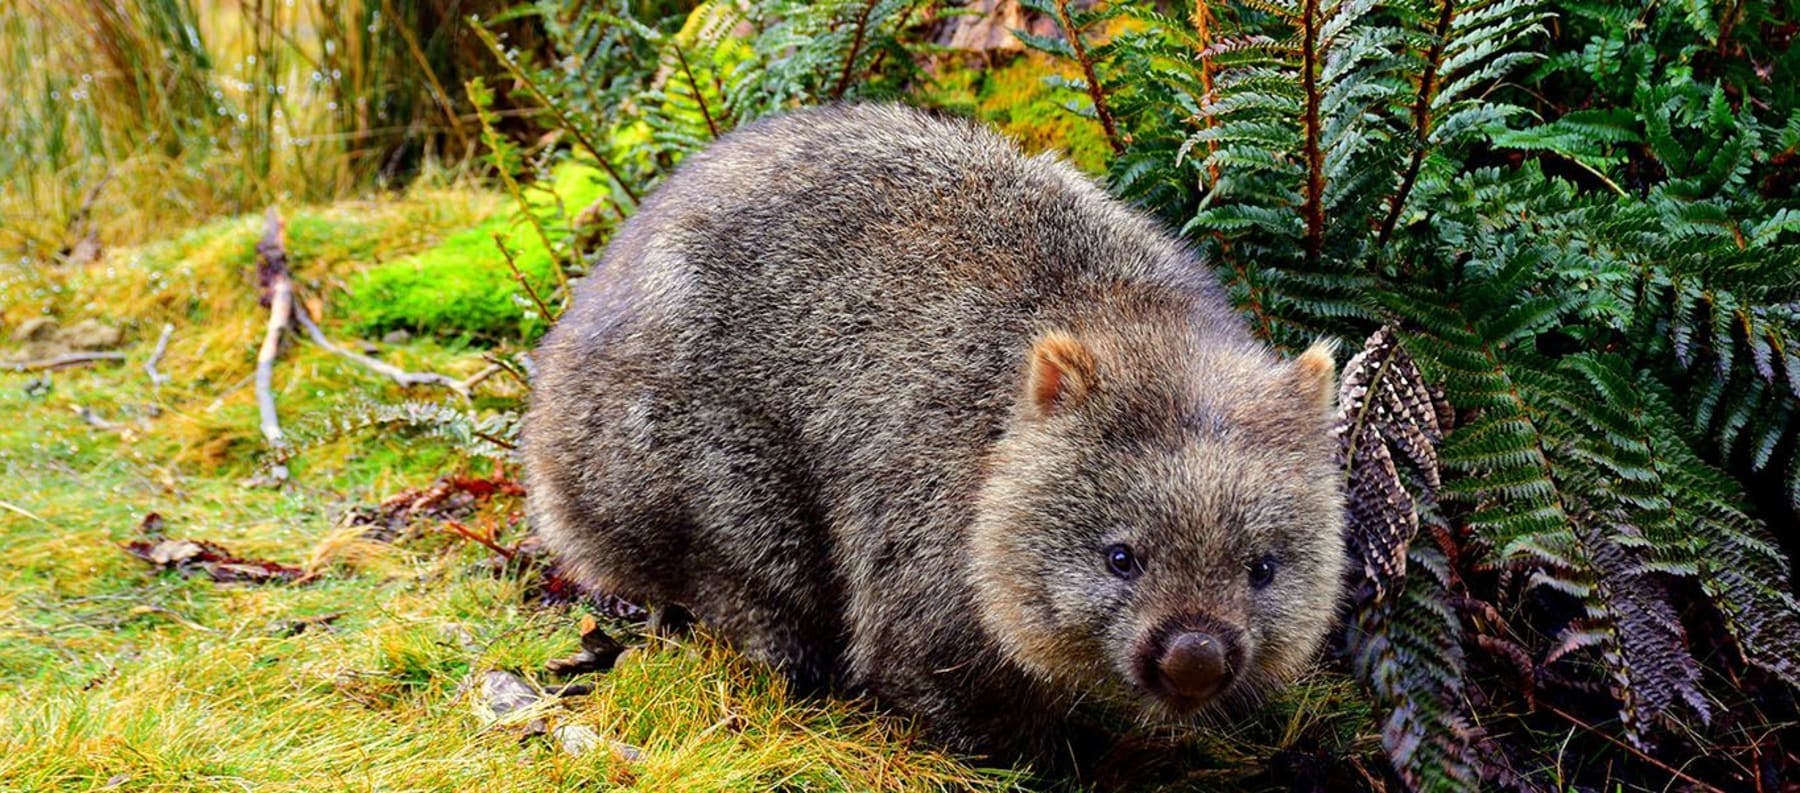 Wombat at Cradle Mountain in Tasmania